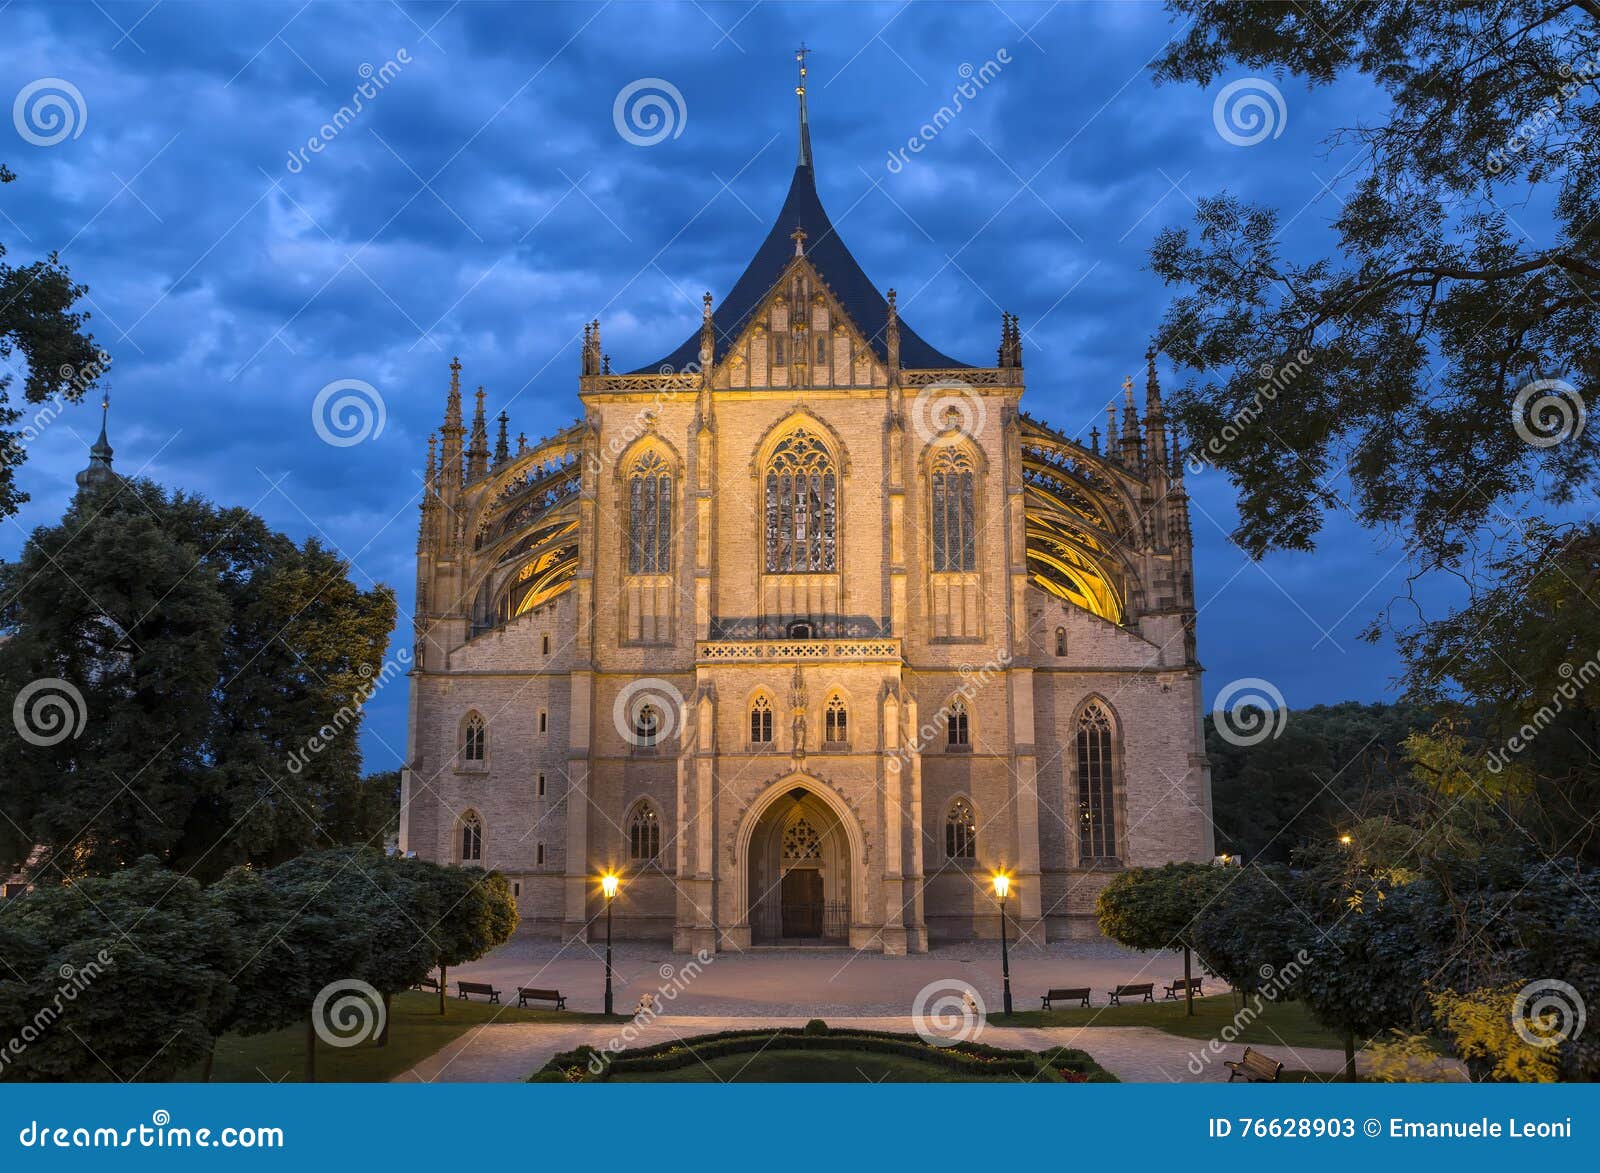 st. barbara cathedral in kutna hora, bohemia, czech republic.